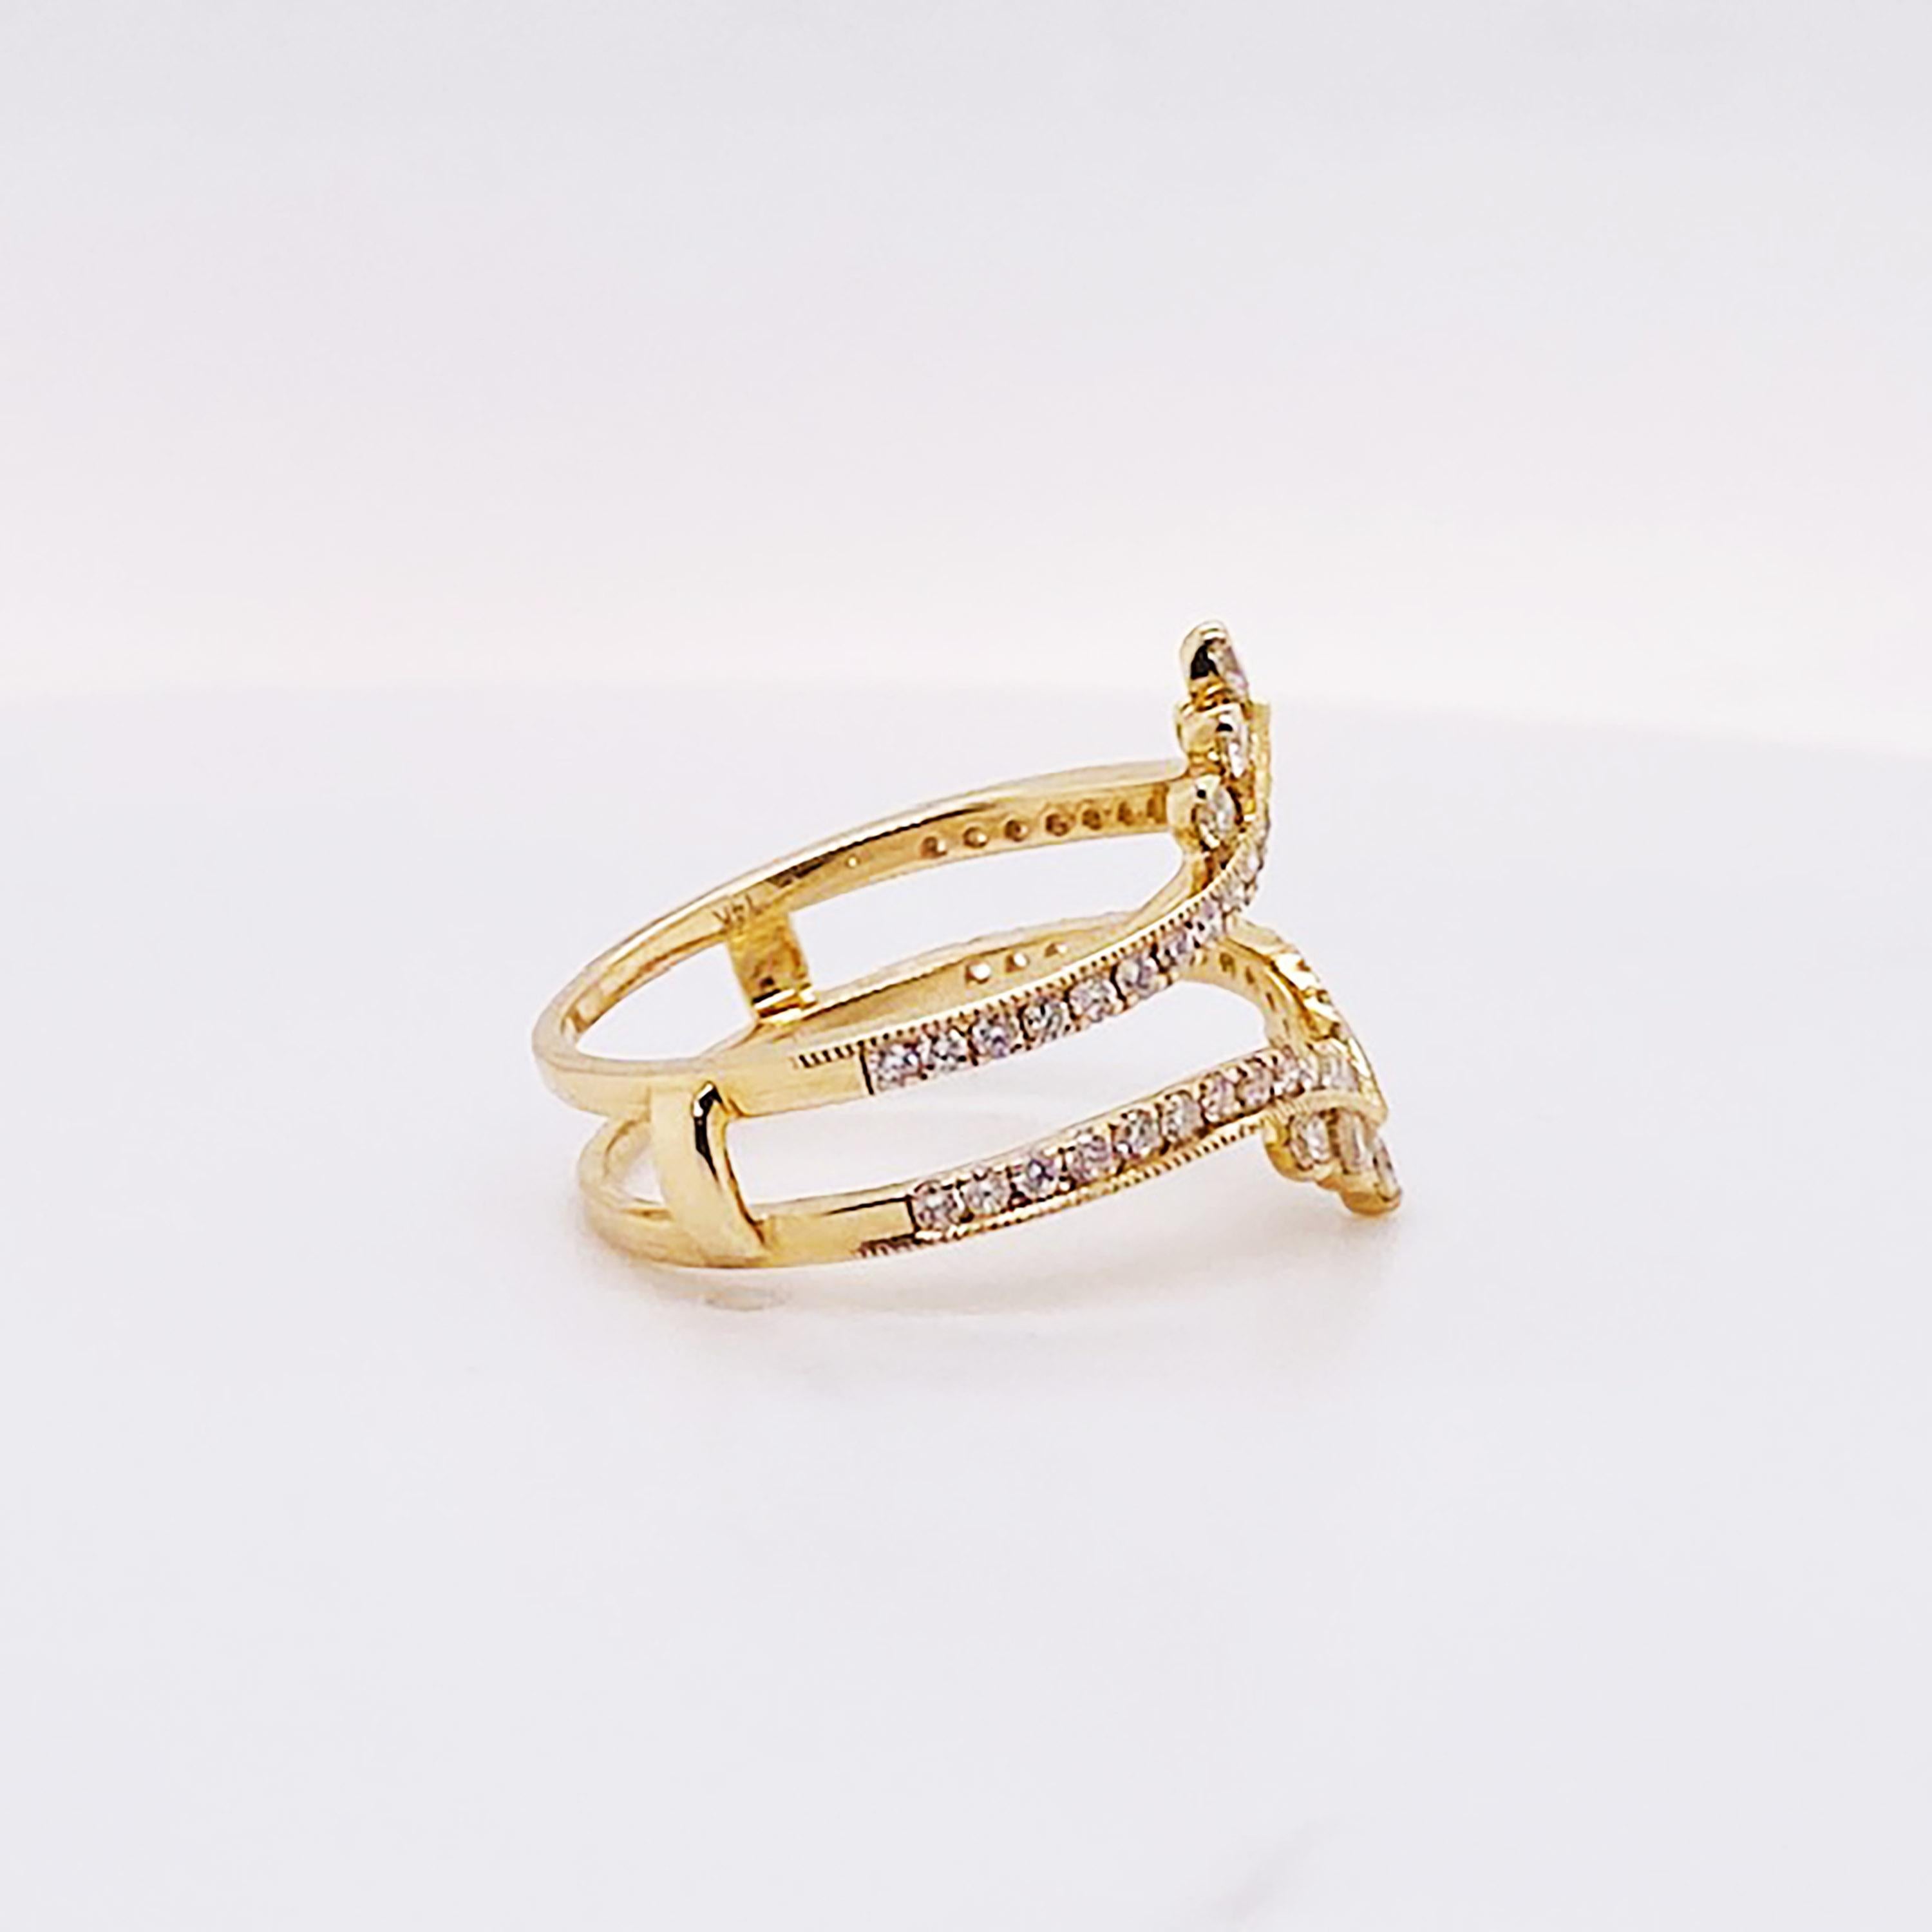 For Sale:  Diamond Crown Ring Enhancer 14K Gold .55 Carat Diamond Ring Guard Wedding Band 6